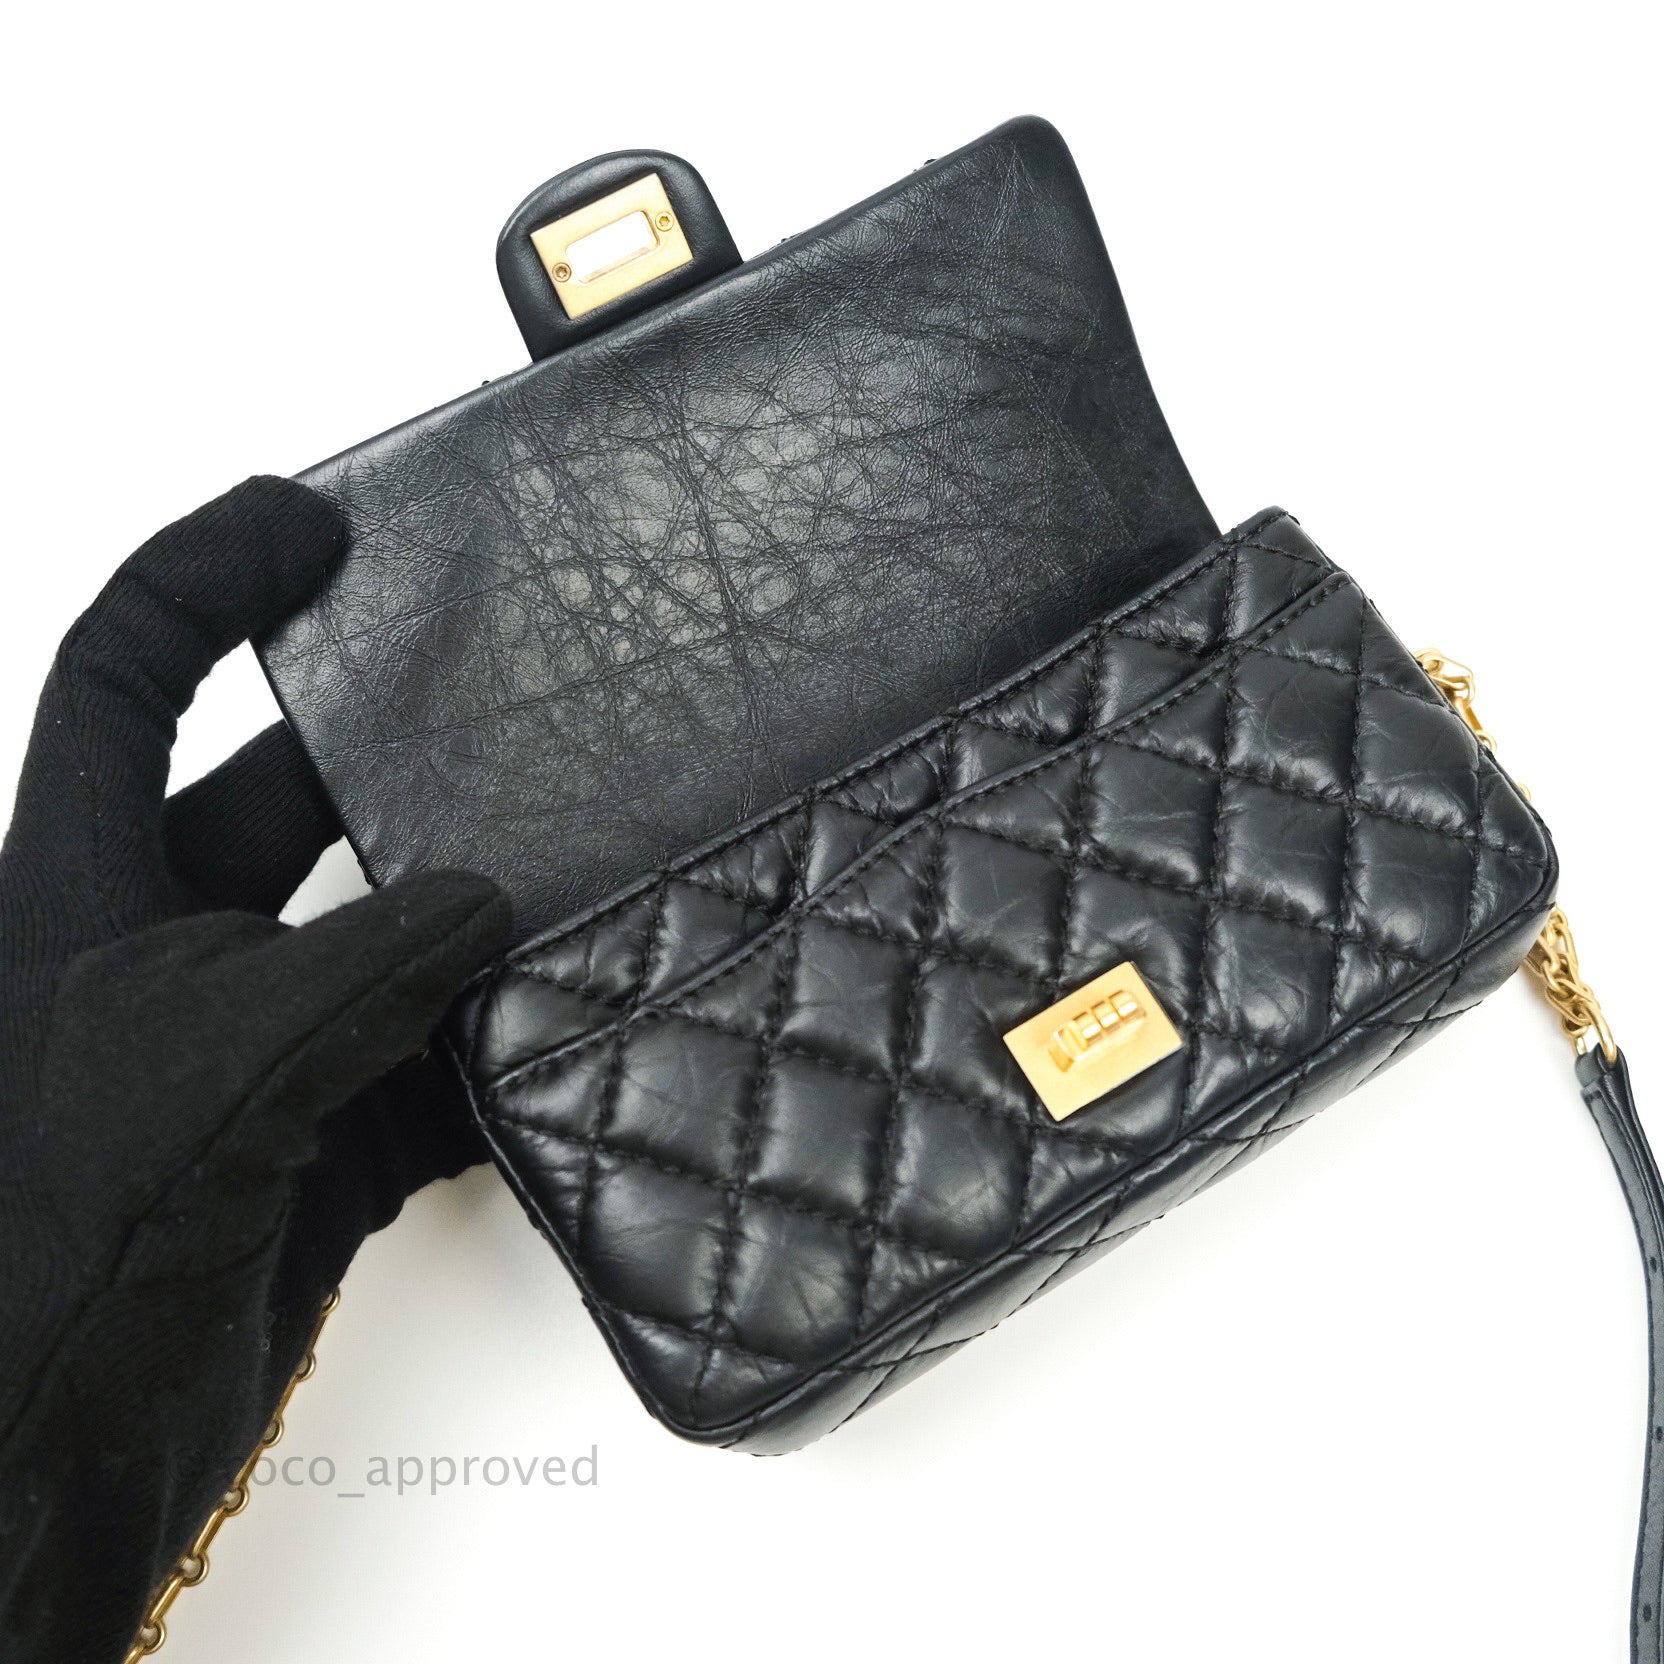 Chanel 2.55 caviar black belt bag